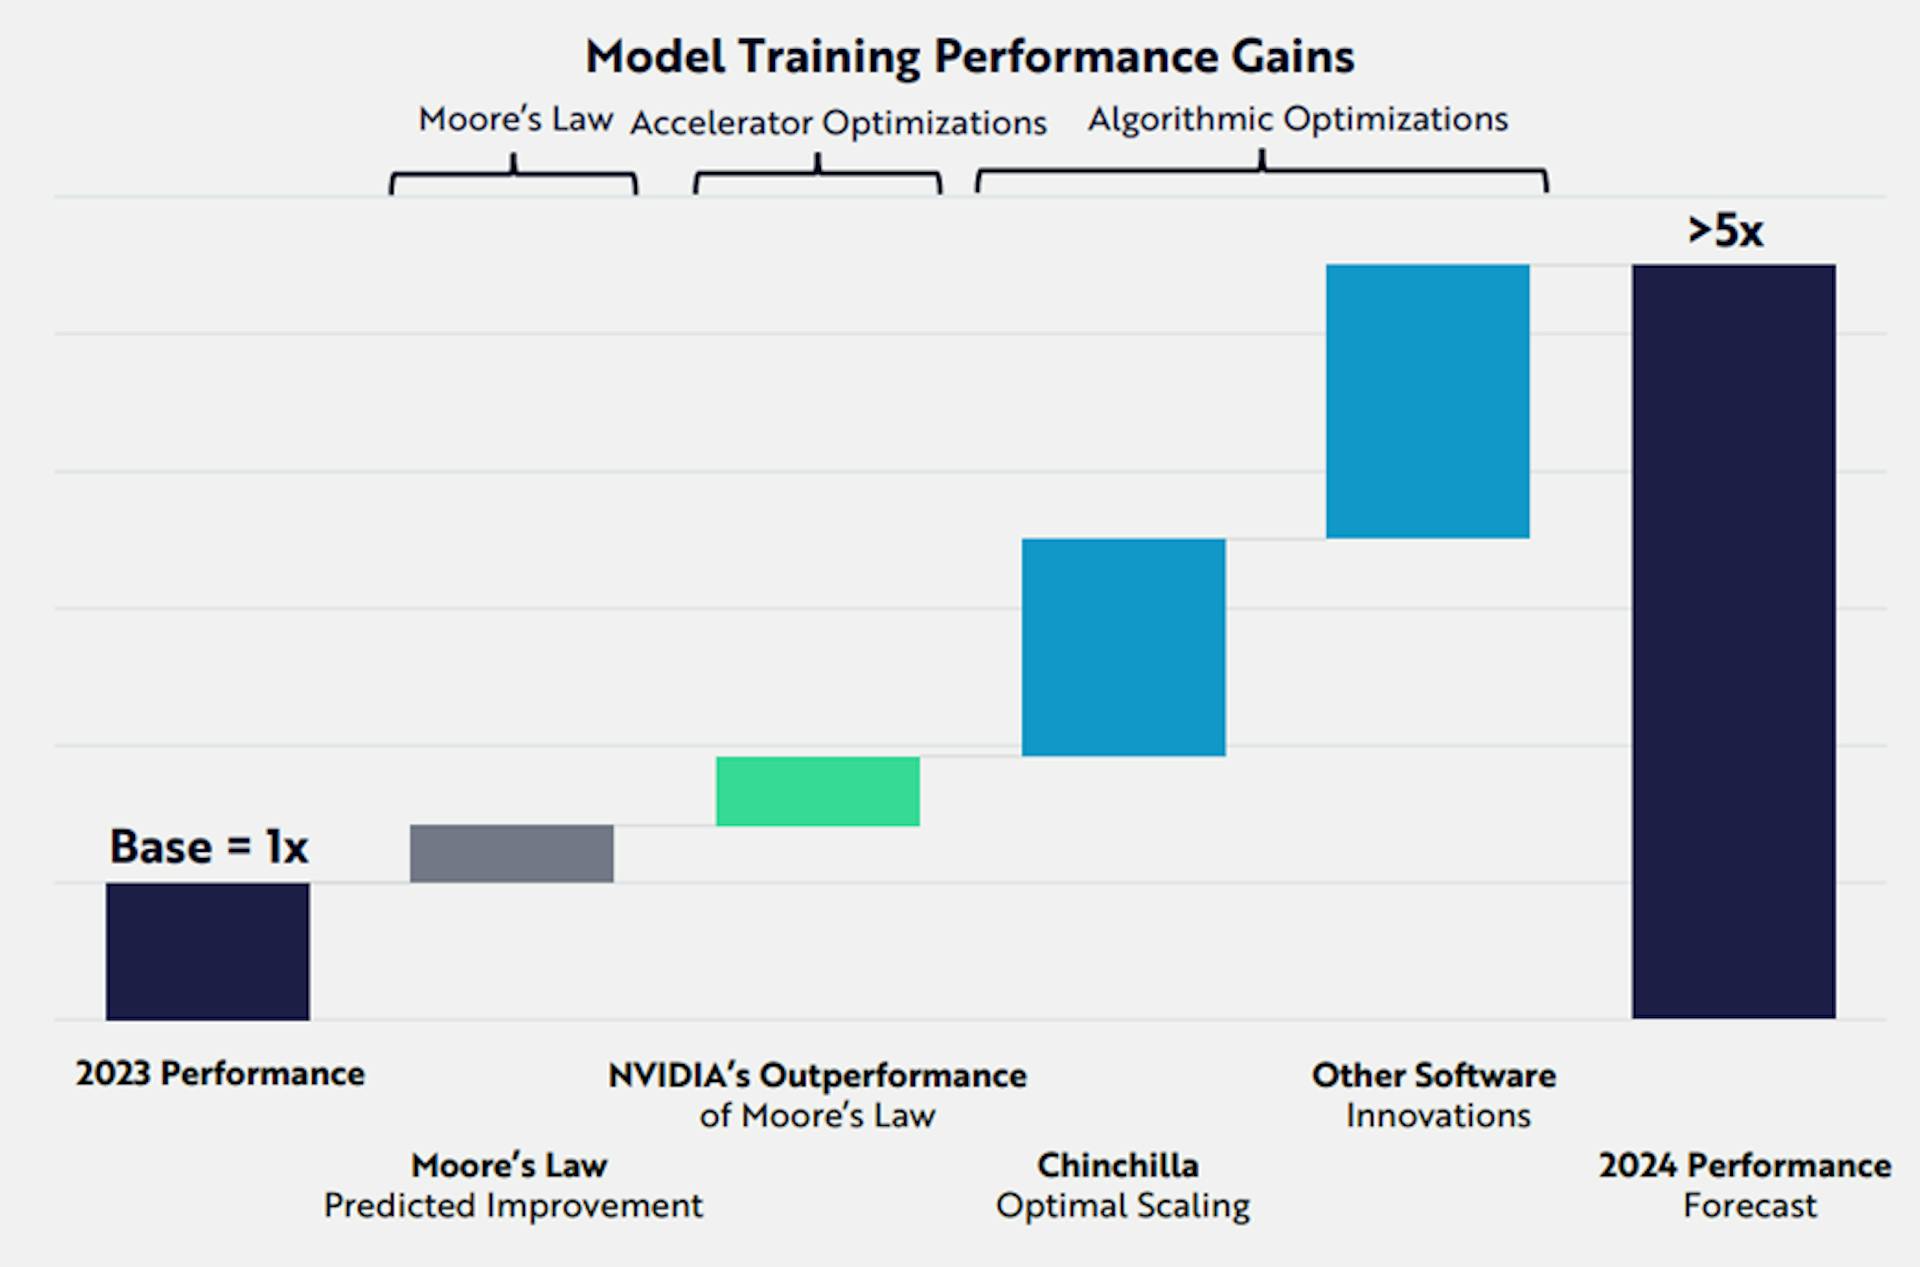 Model training performance gains